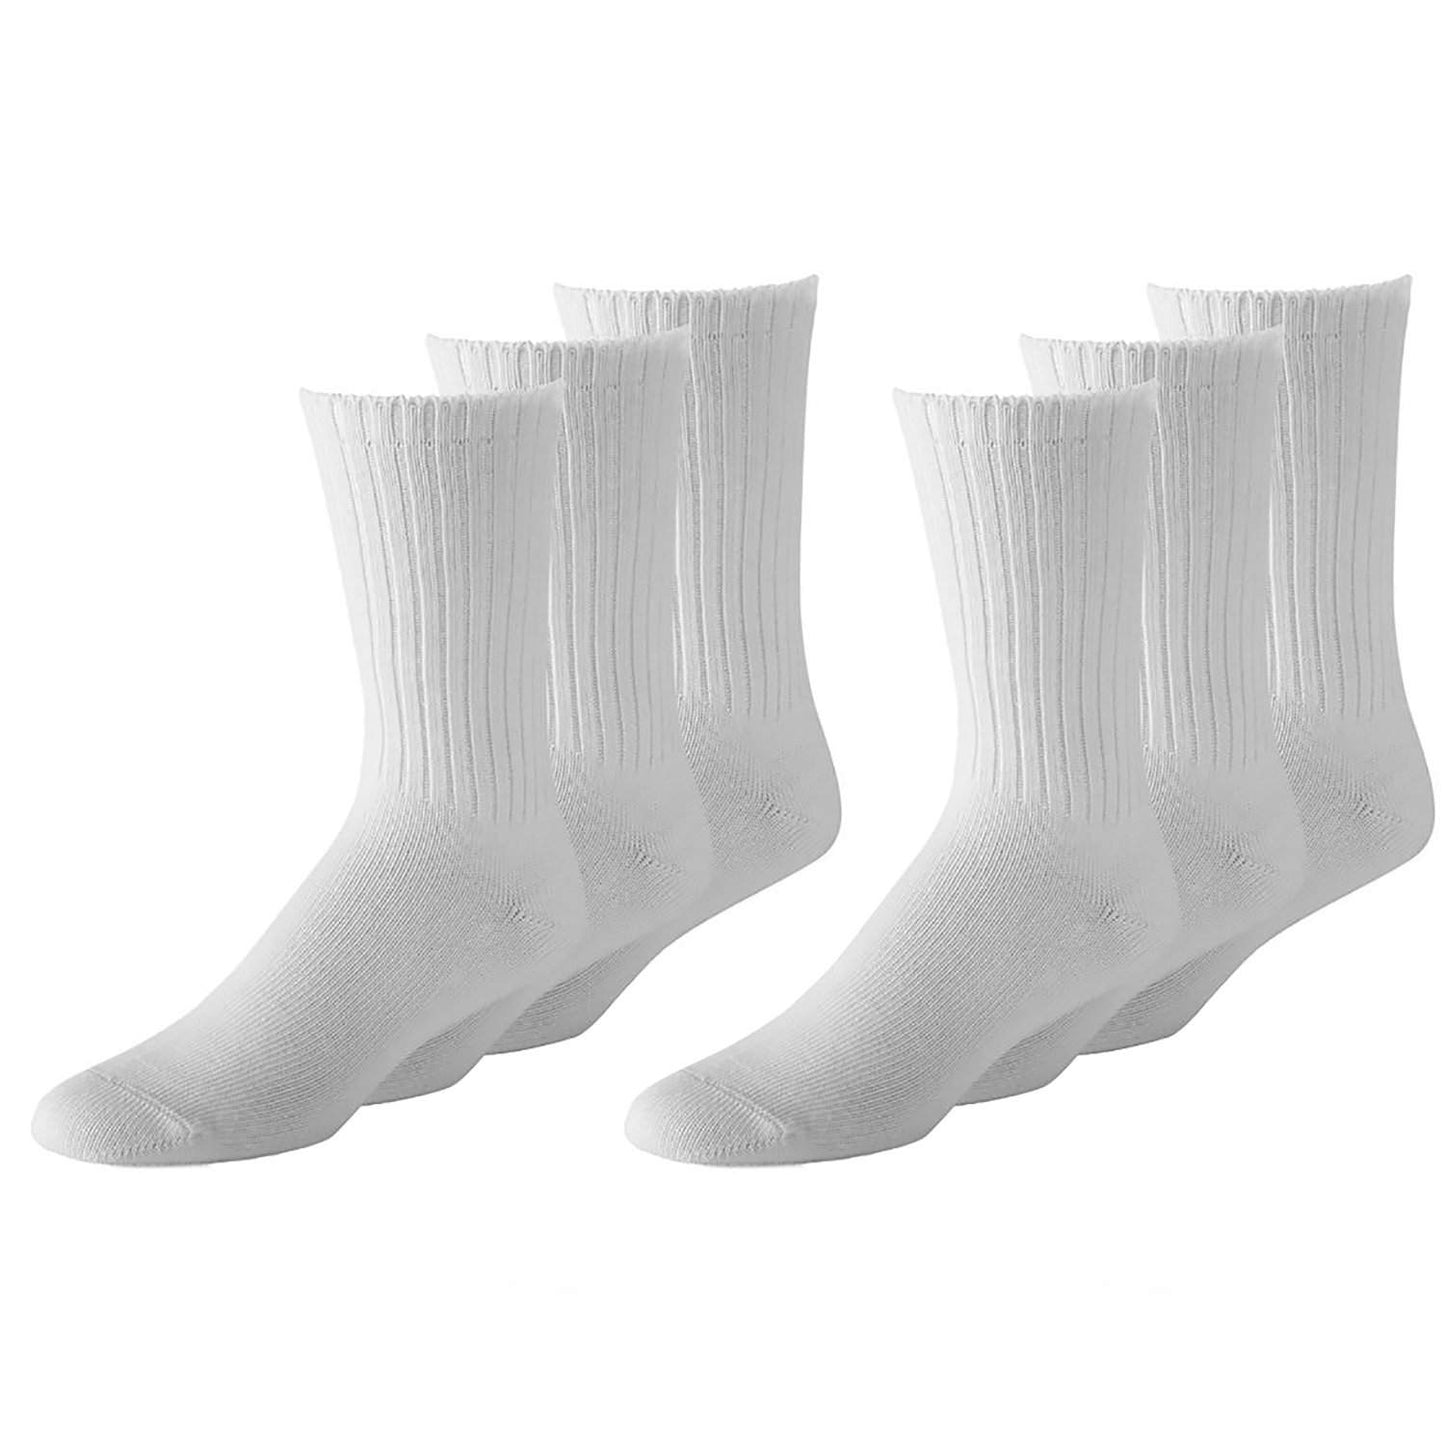 Unisex Crew Athletic Sports Cotton Socks  48 Pack